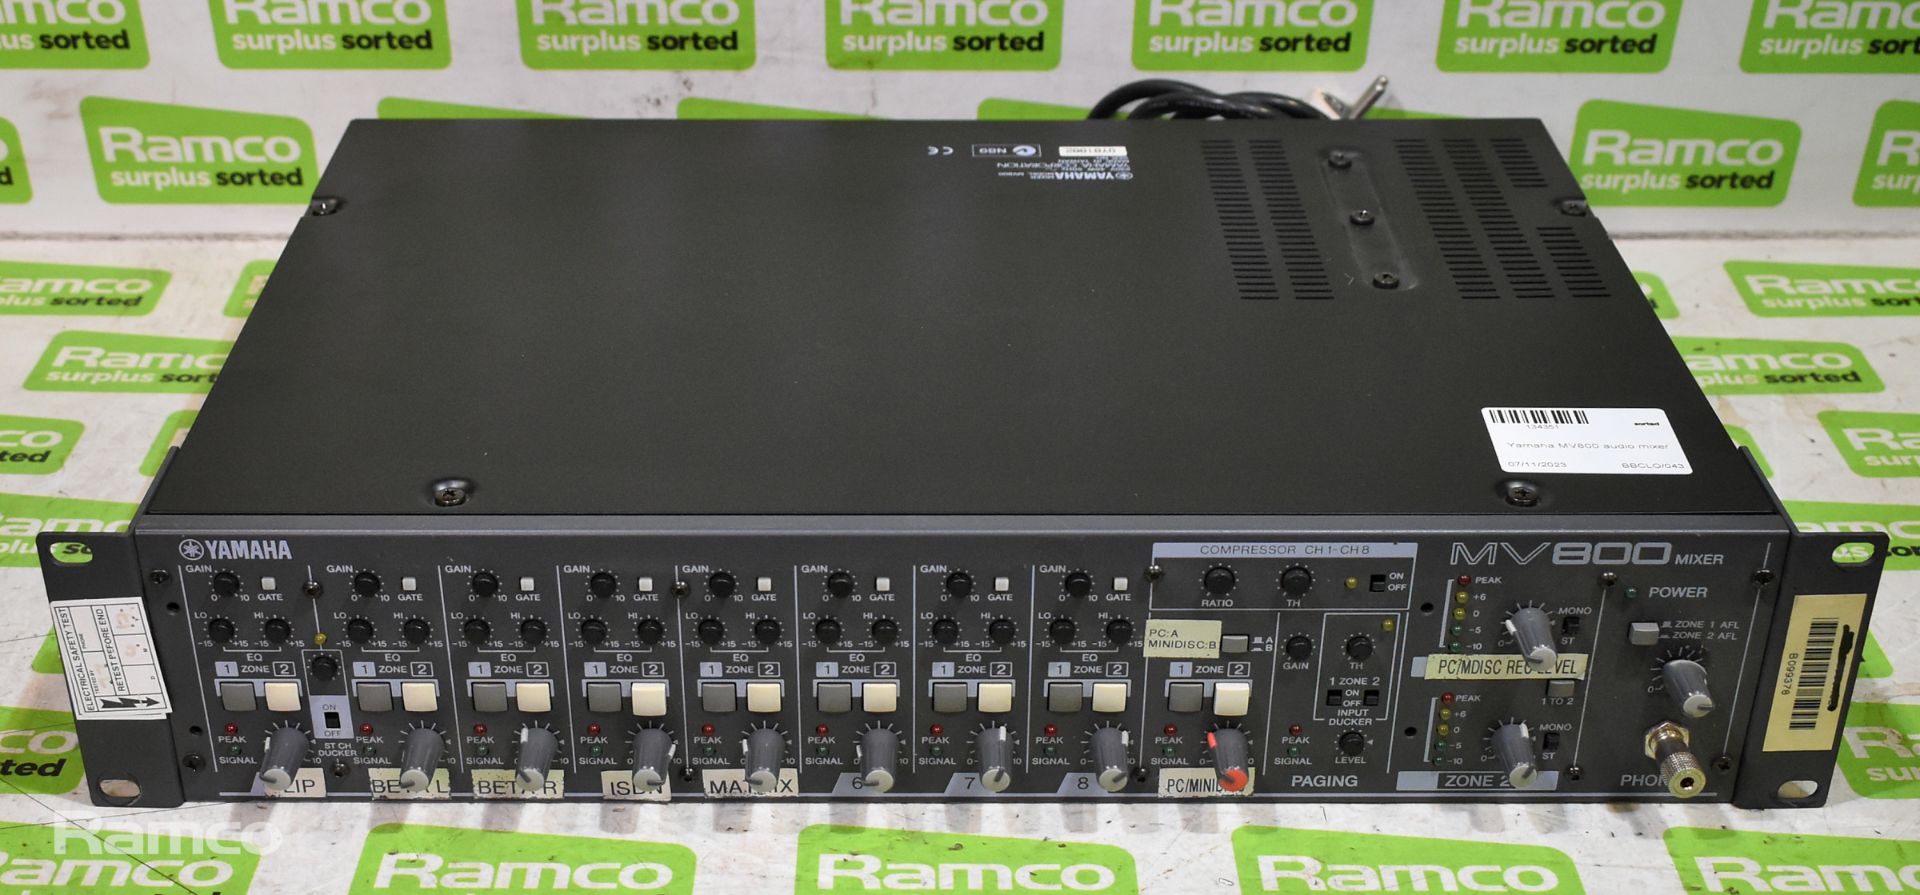 ALTO Pro ZMX862 6-channel 2-bus mixer, Yamaha MV800 audio mixer - Image 2 of 12